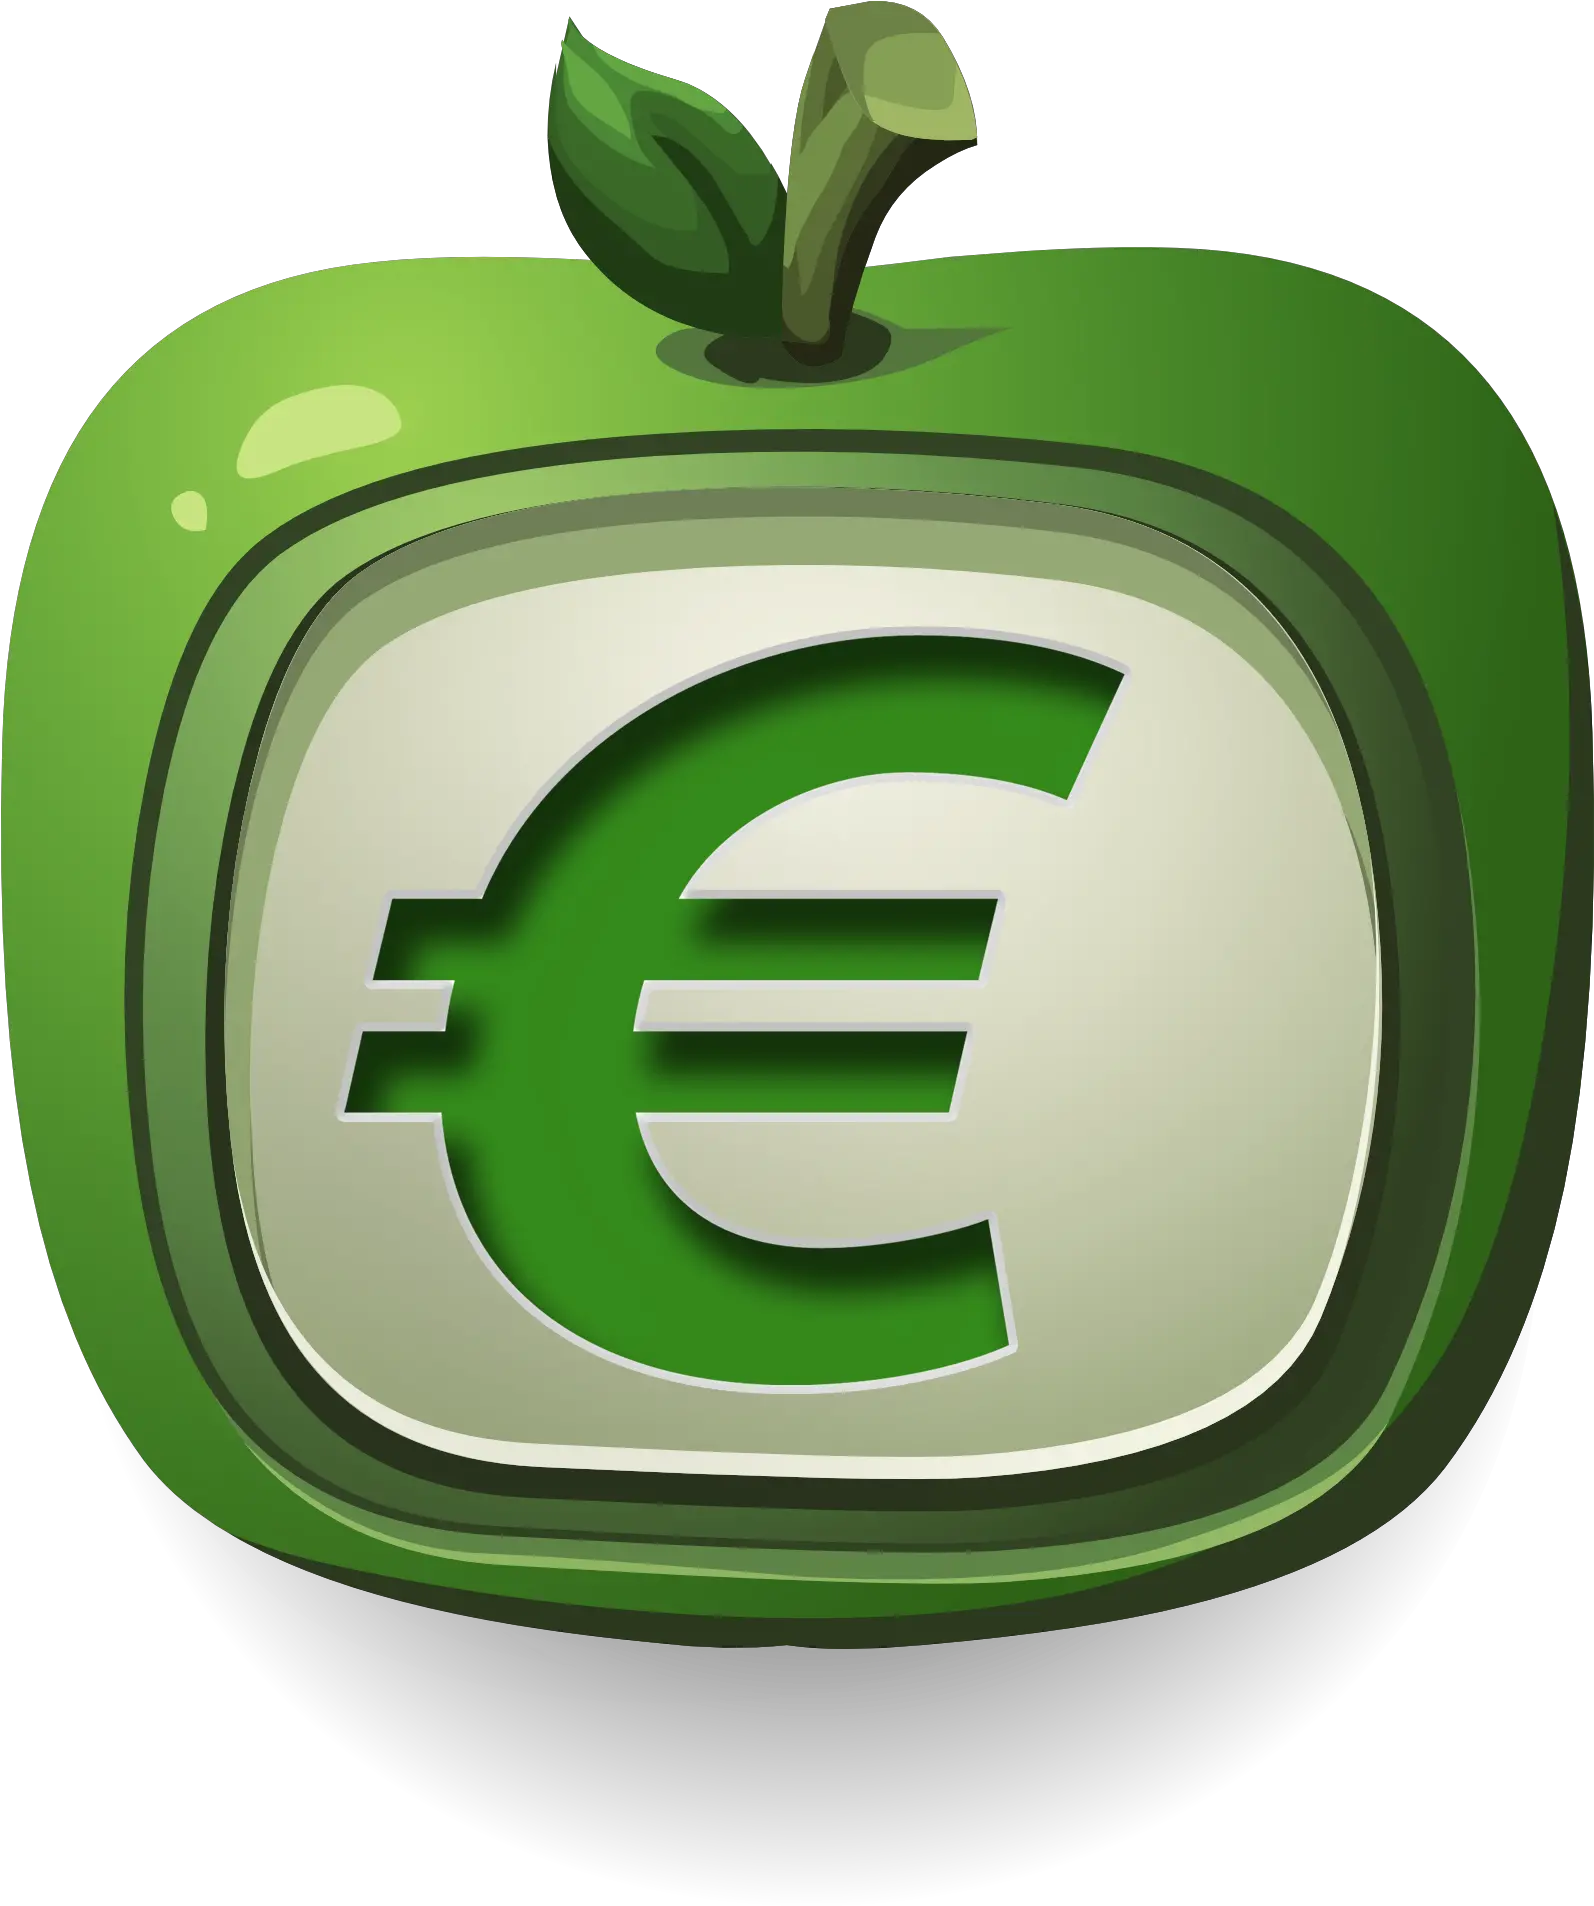 Green Apple Icon With Euro Symbol Free Image Download Biologia En La Economia Png Euro Icon Png